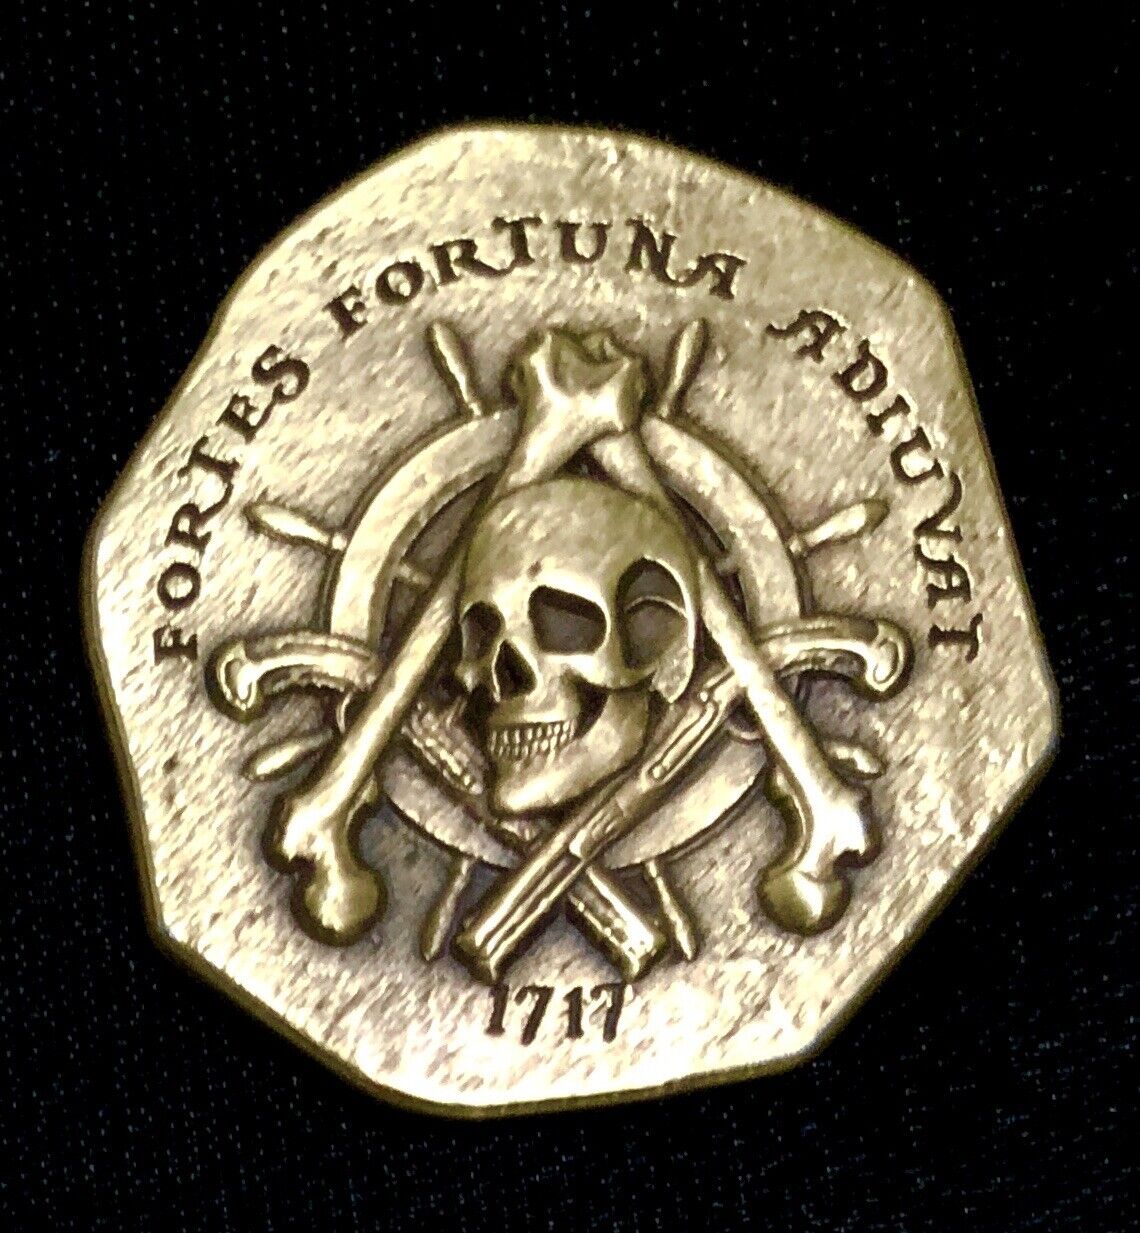 Treasure Cob Style Pirate Challenge Coin With Freemason Masonic Symbols Gold